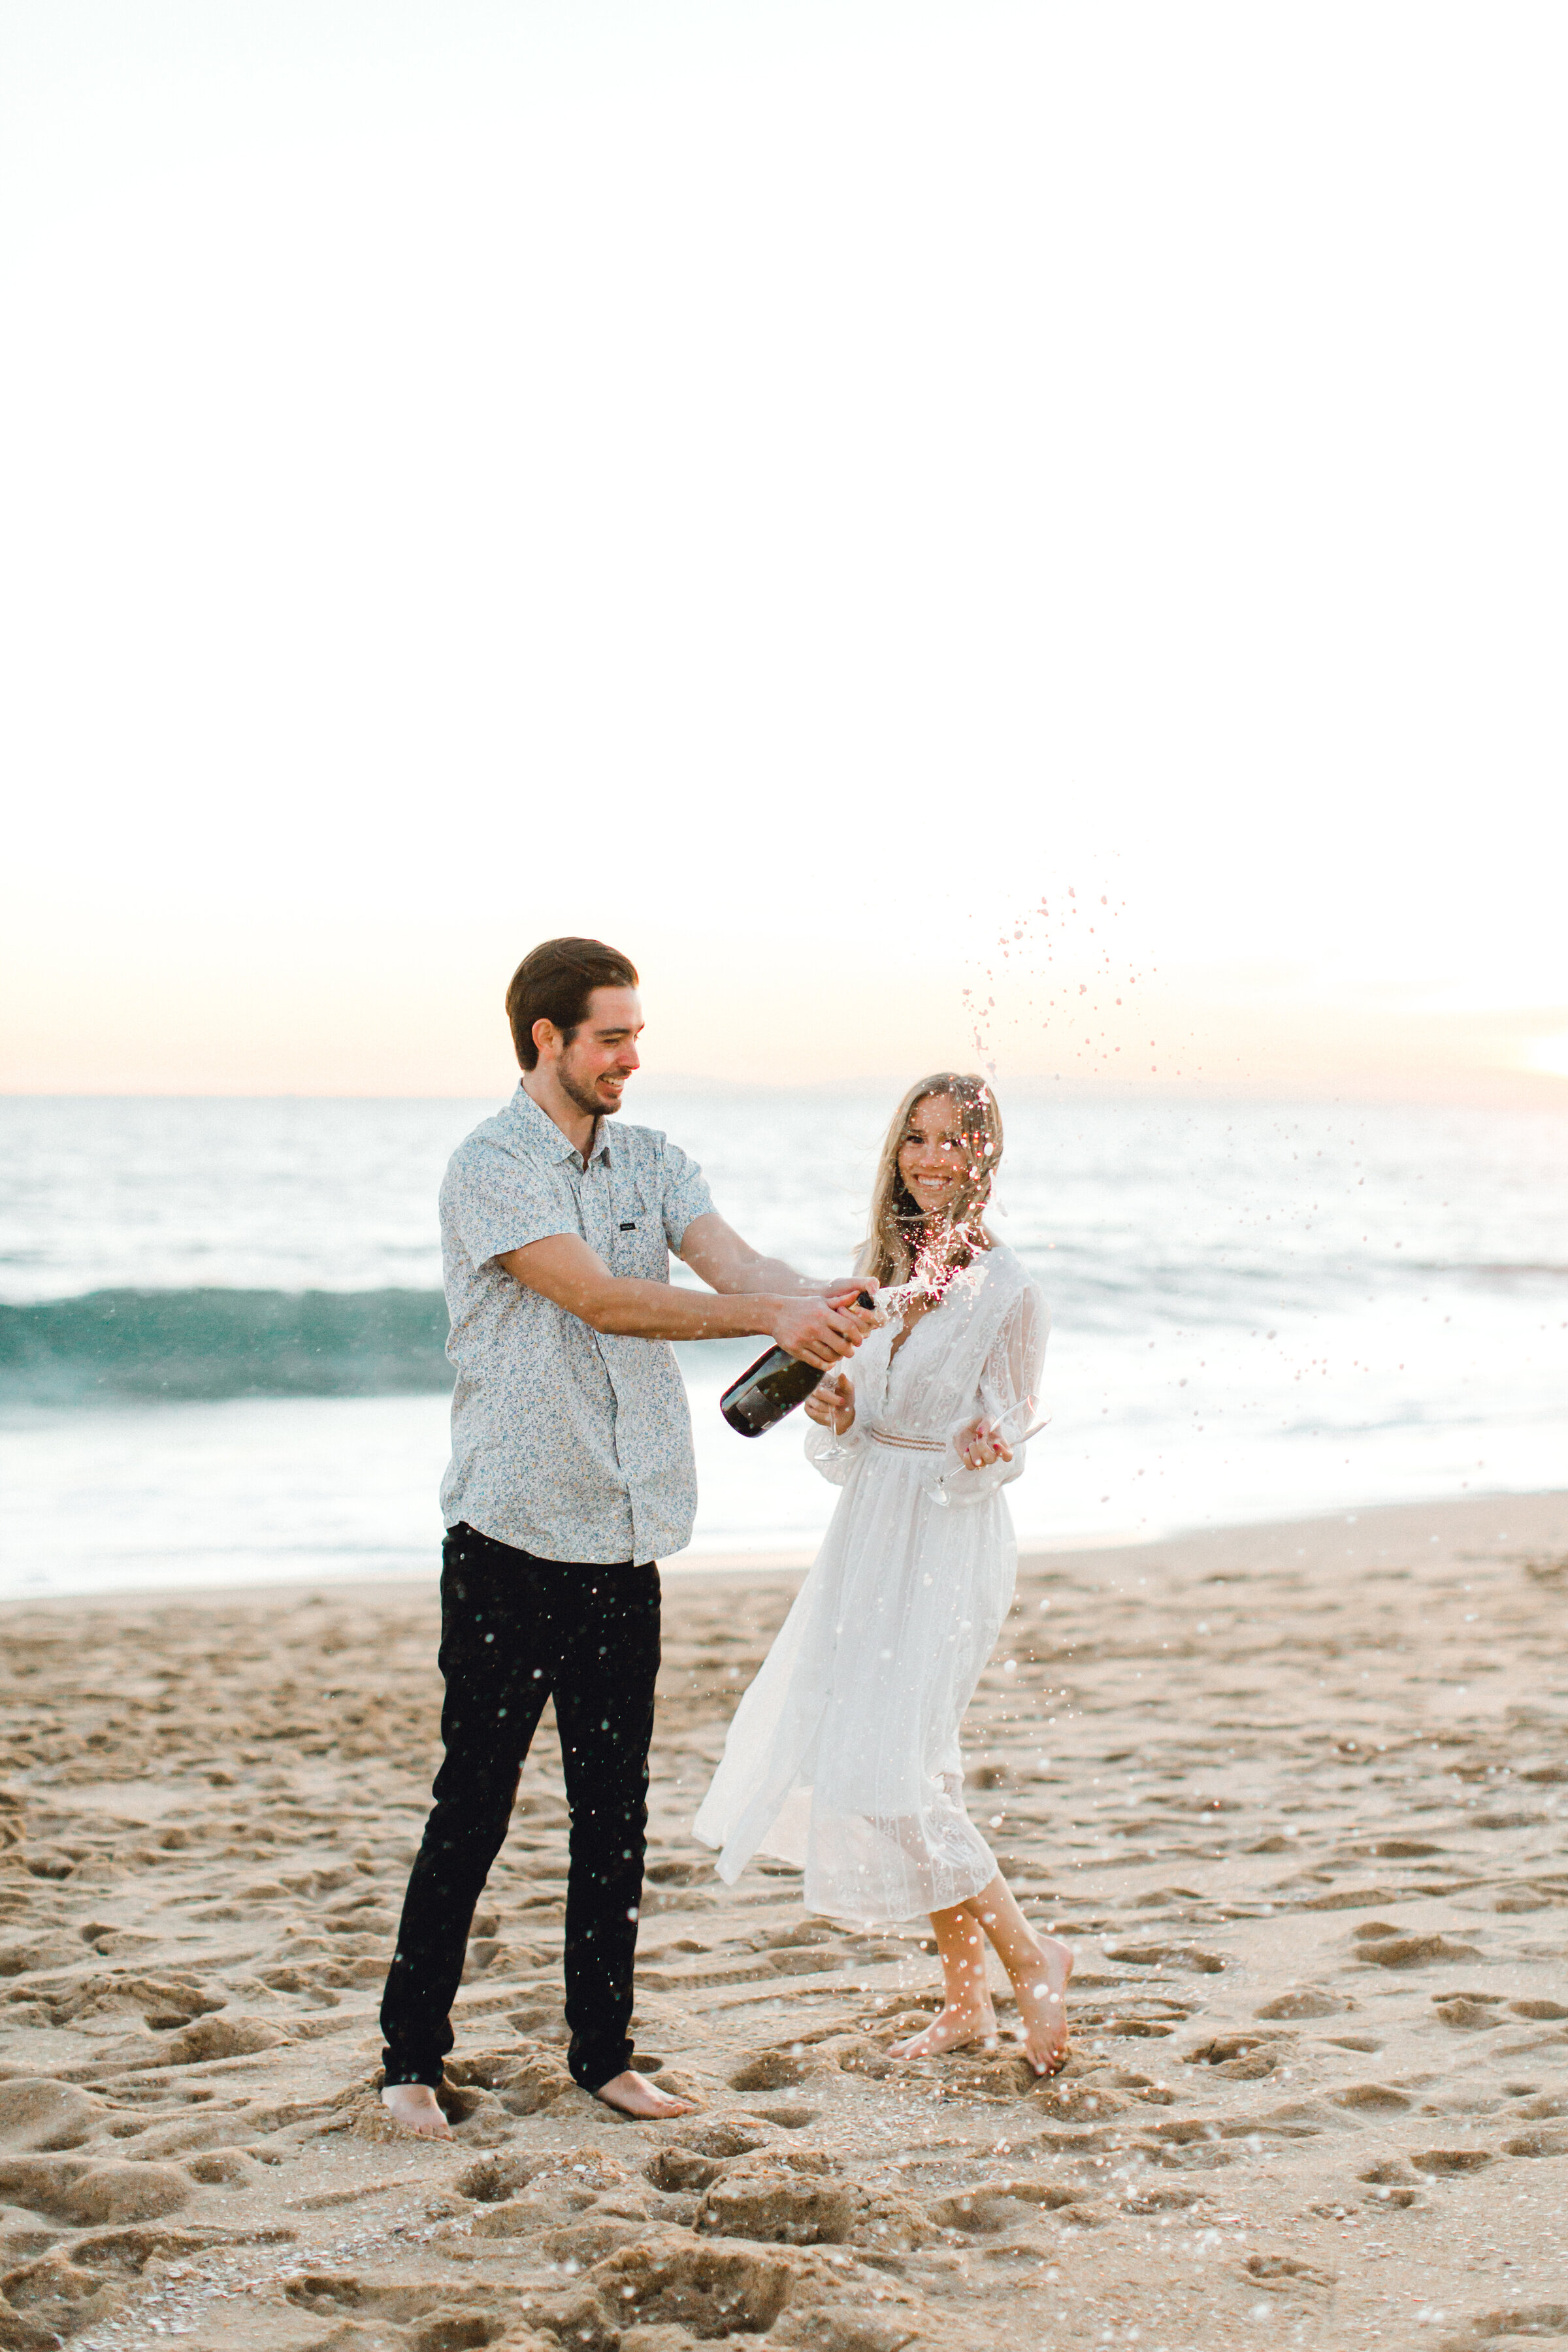 Max + Victoria | Engagement, Newport Beach (227 of 276)